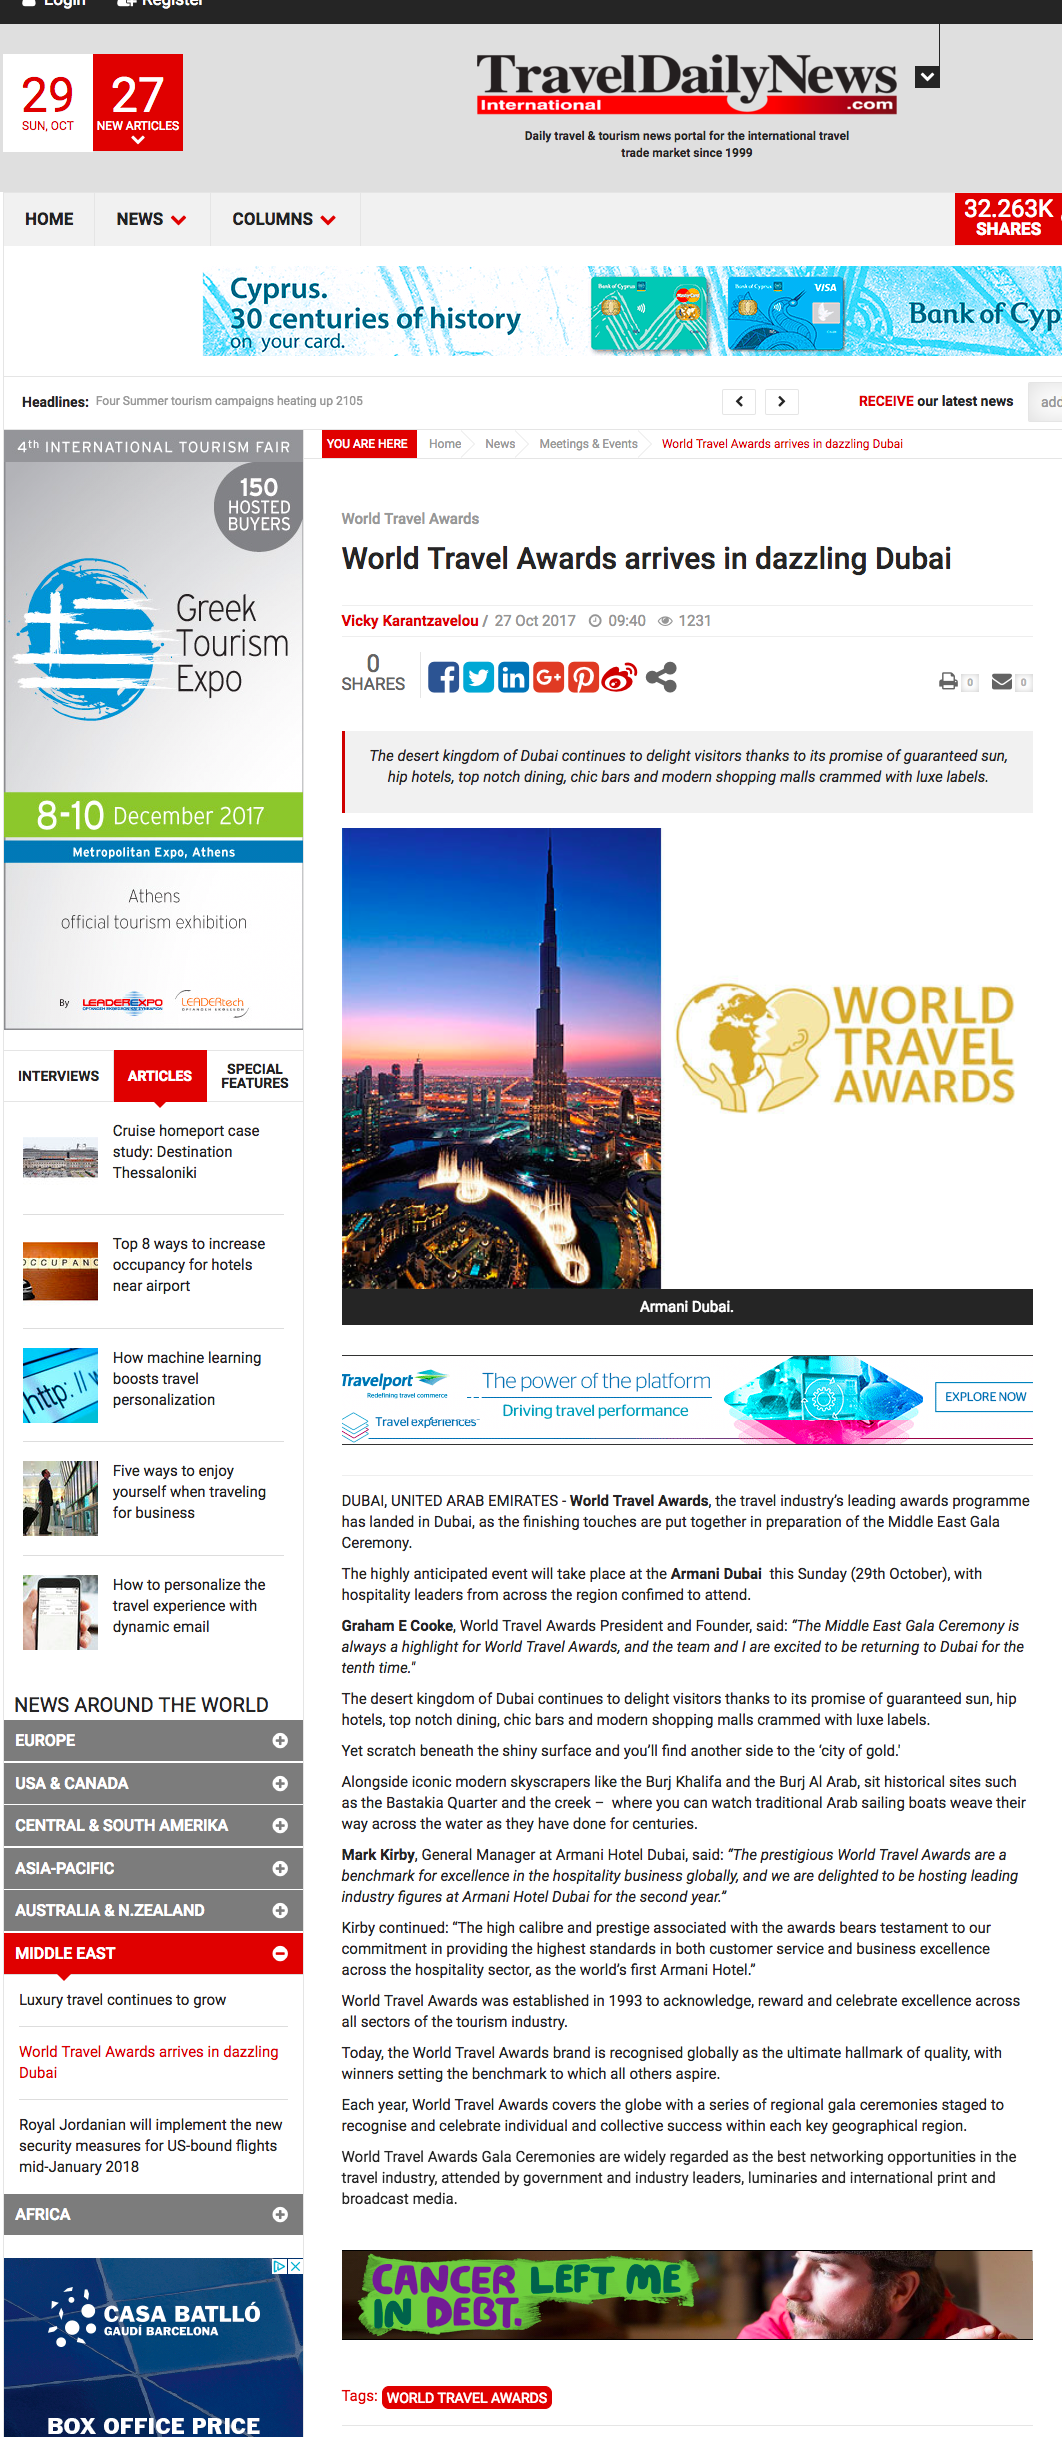 World Travel Awards arrives in dazzling Dubai